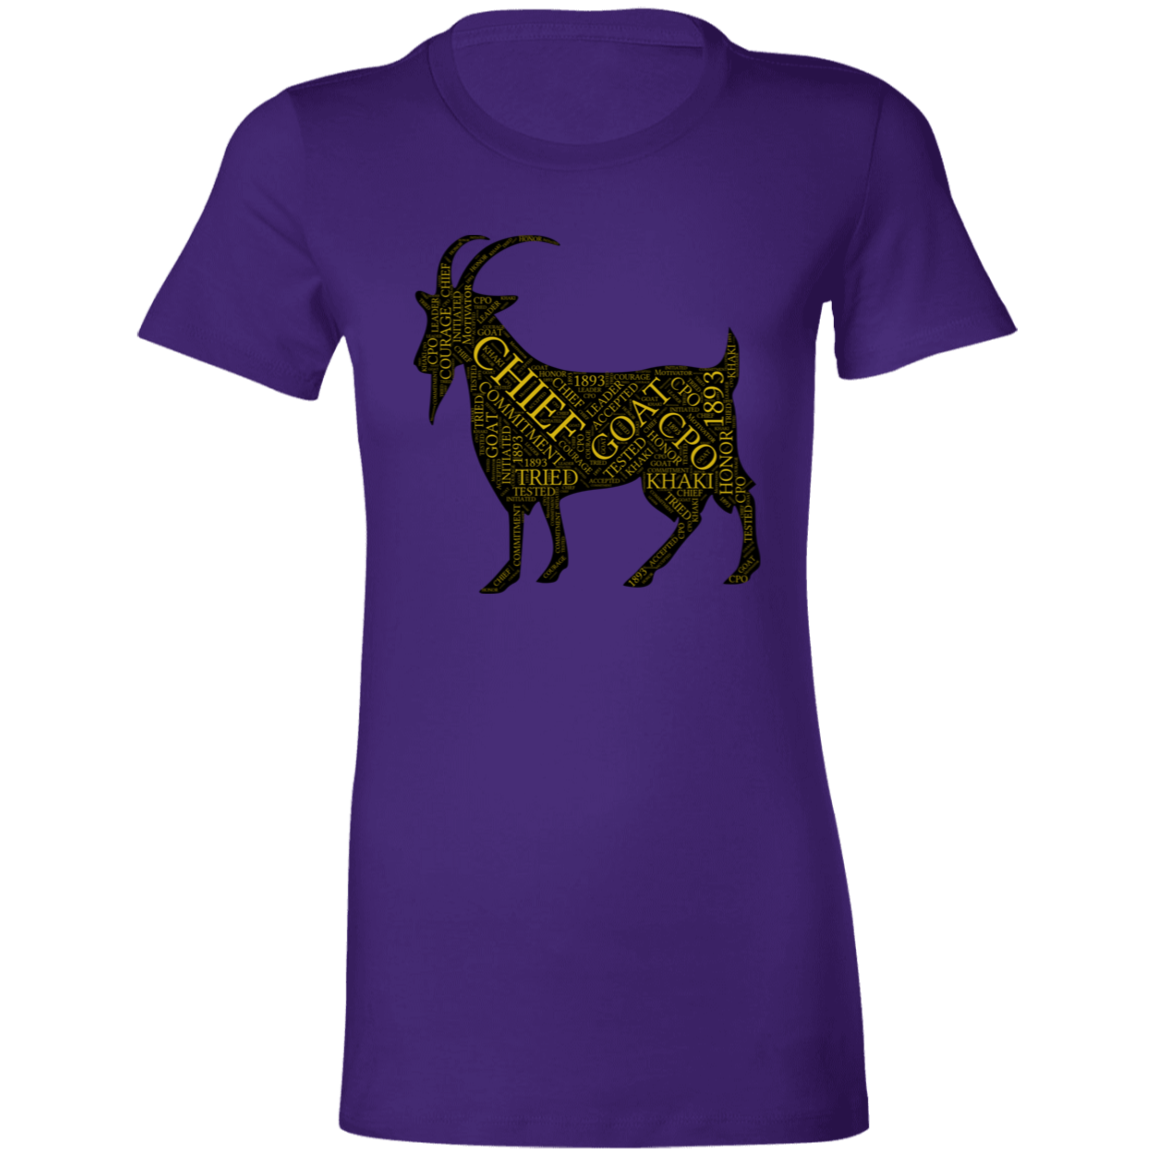 Goat Word Ladies' Favorite T-Shirt